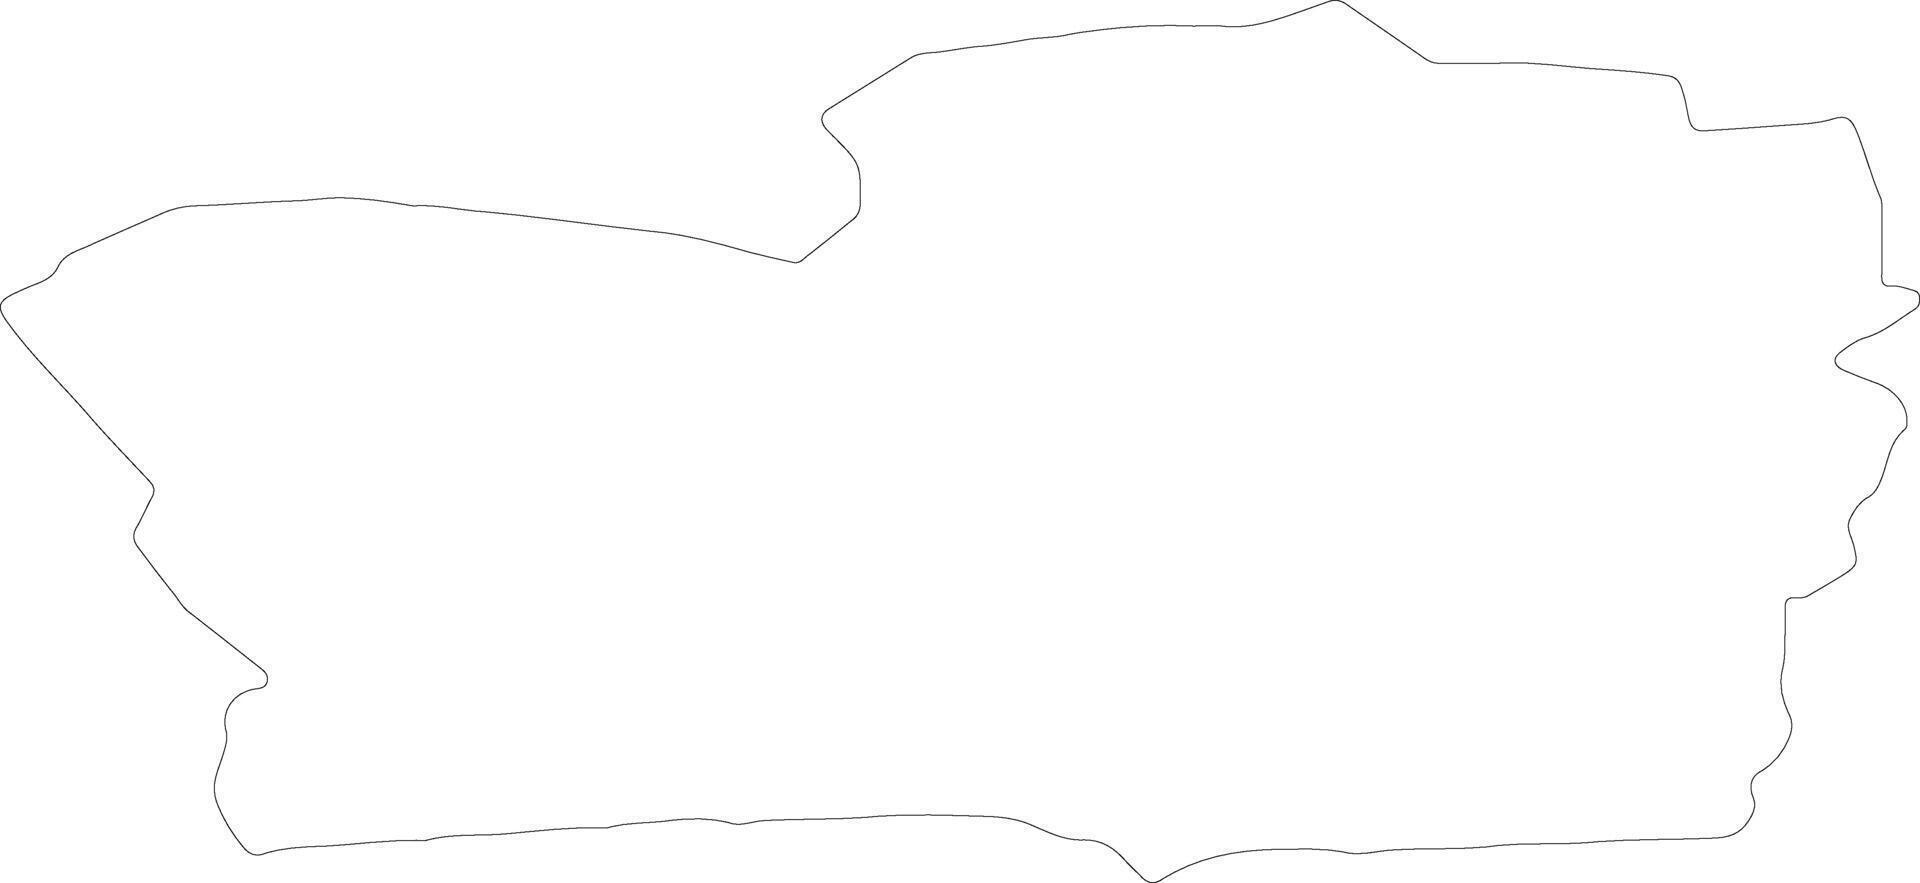 Smiltenes Latvia outline map vector